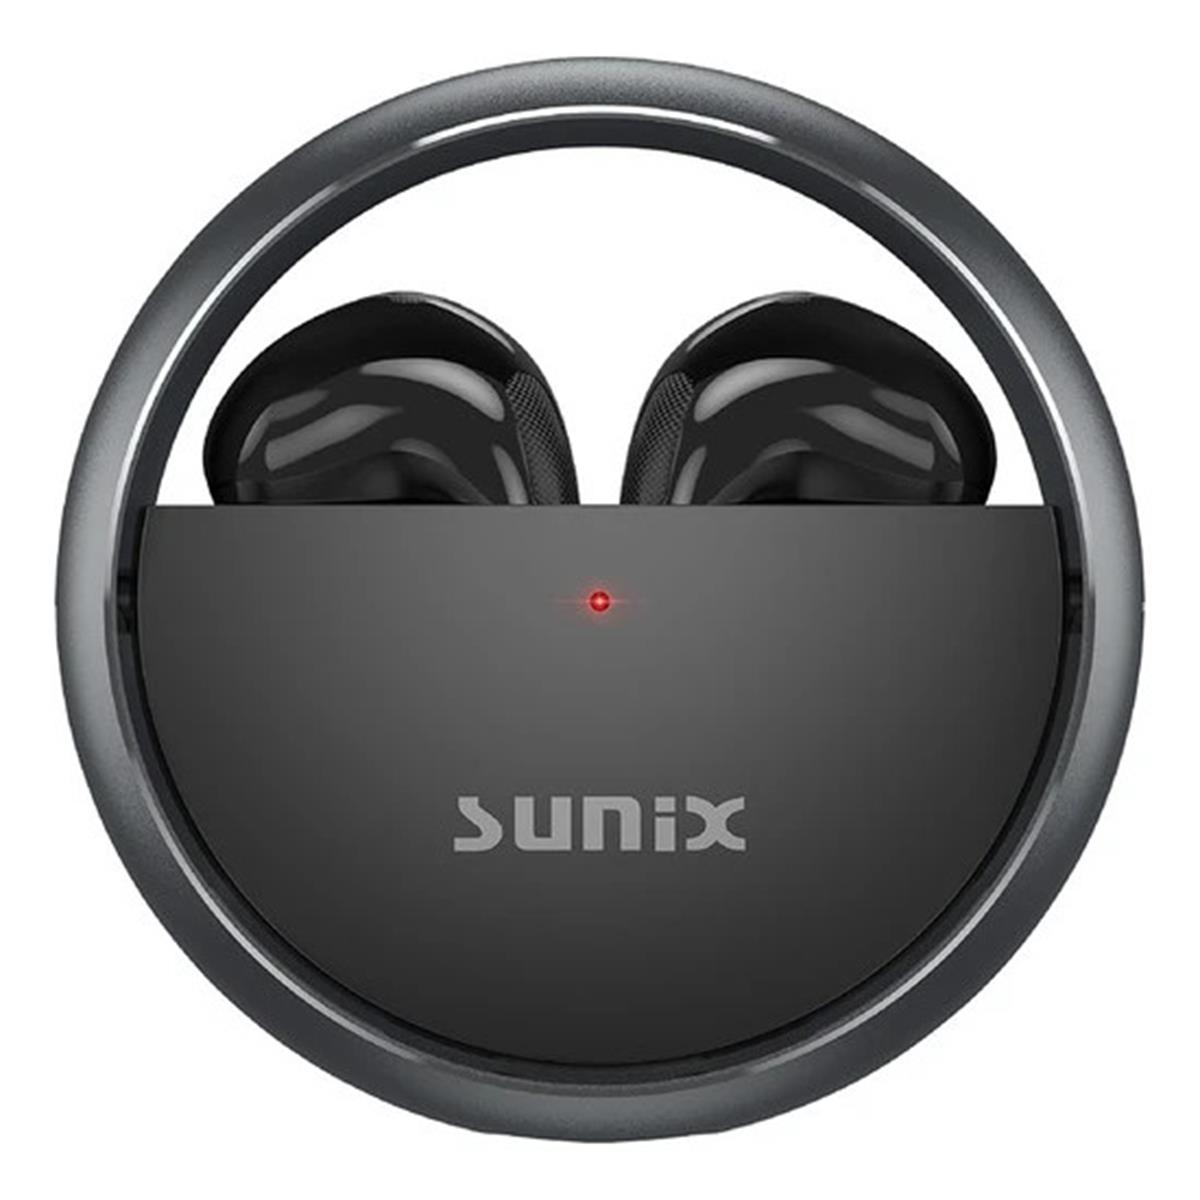 Sunix Blt 40 Bluetooth Dokunmatik Kulaklık-Rona Aksesuar